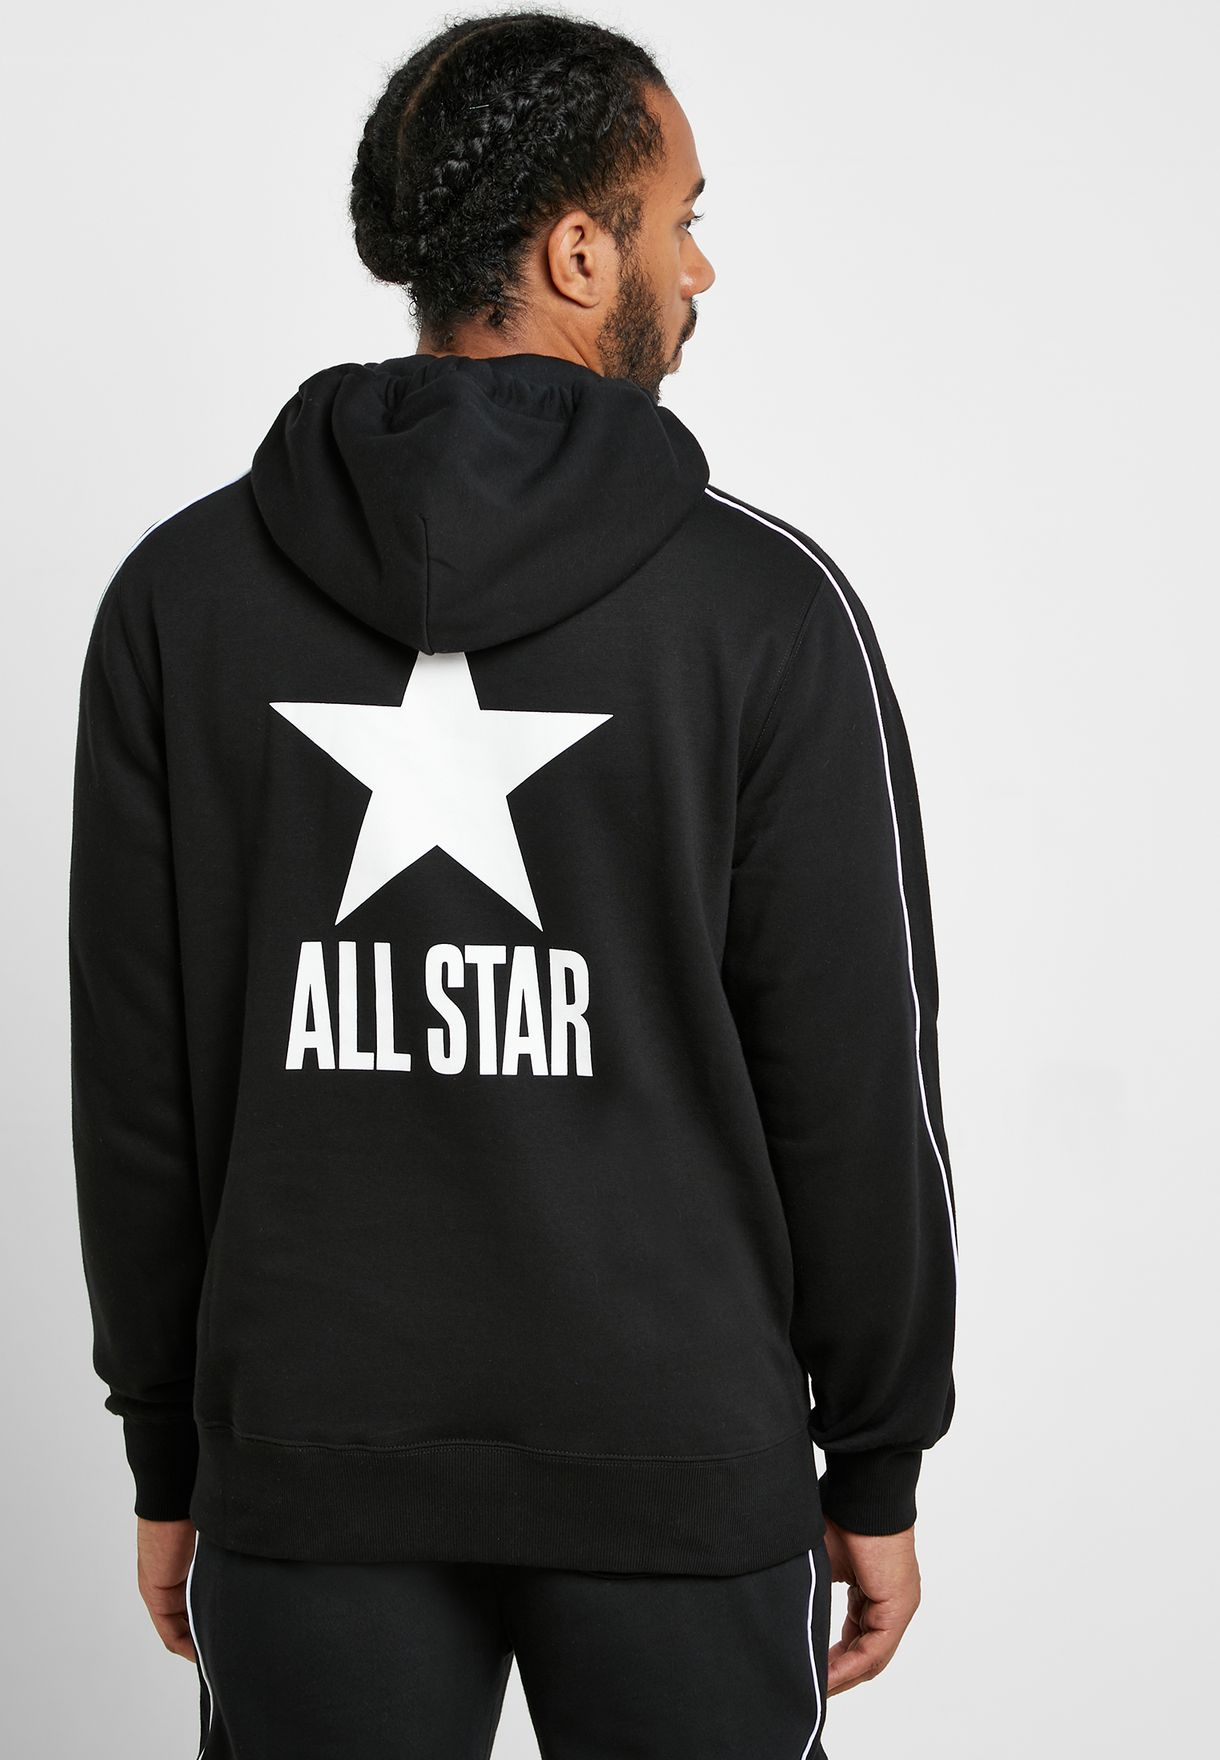 converse all star hoodie mens